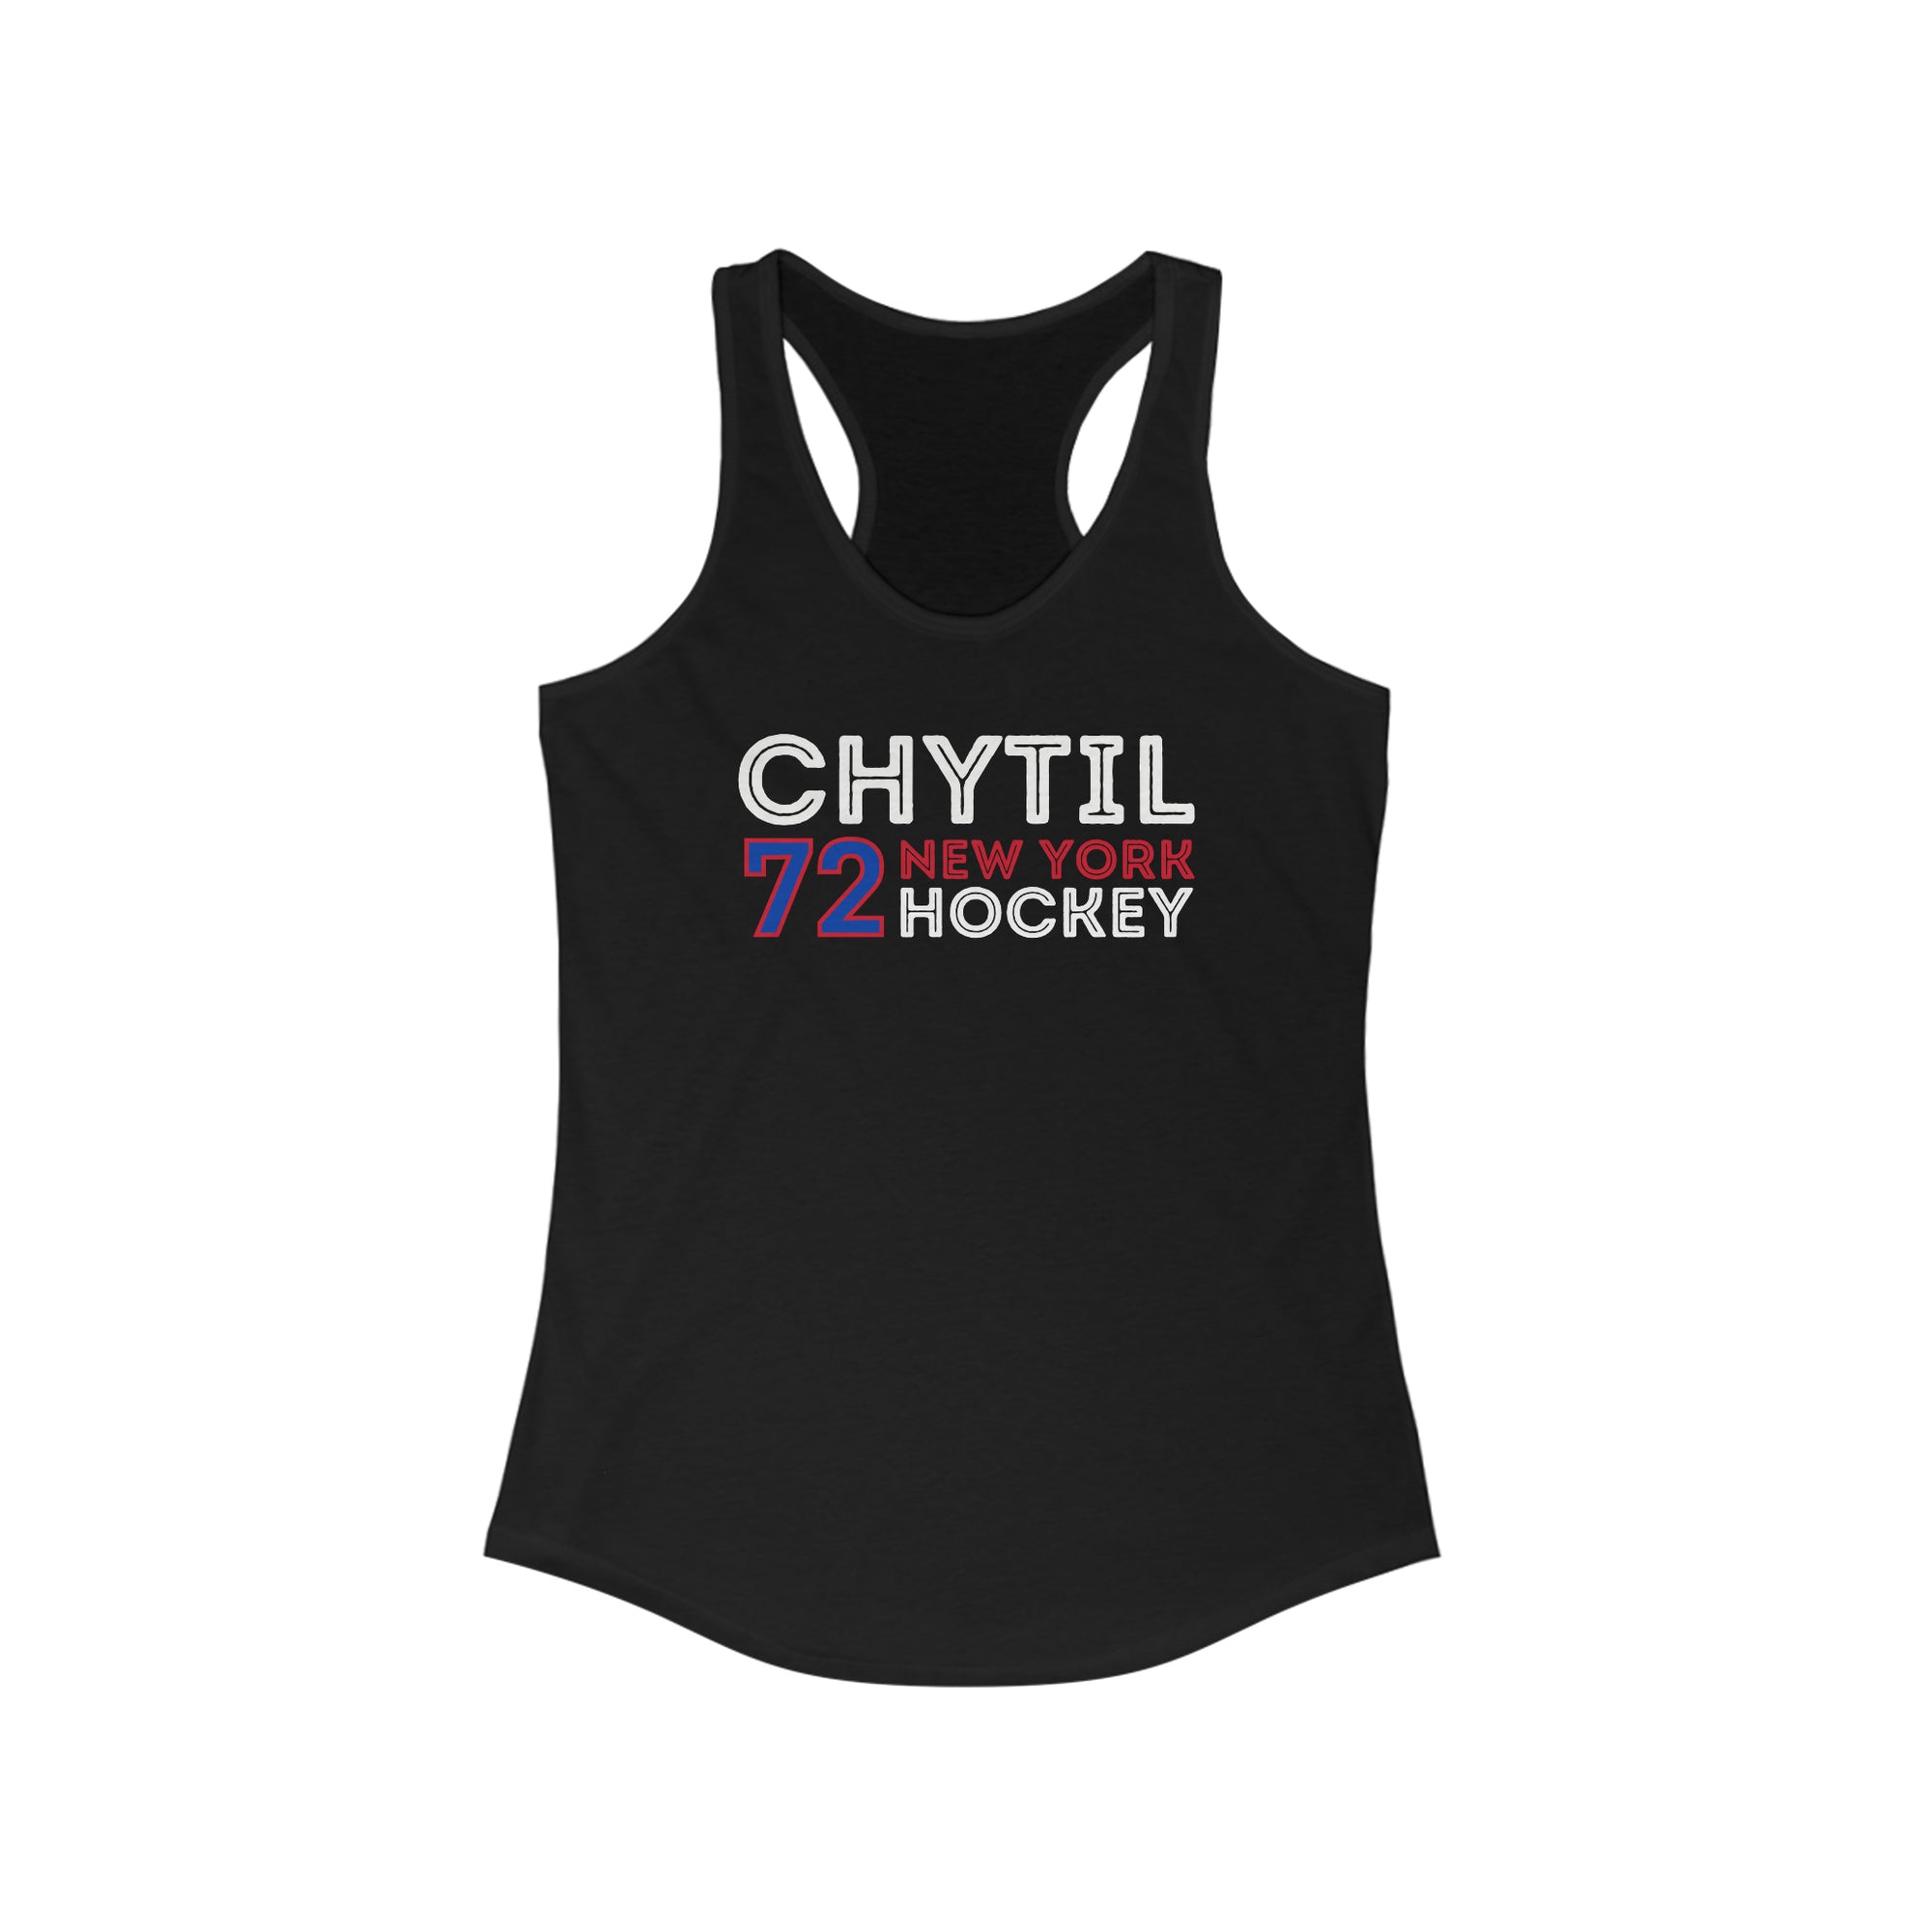 Chytil 72 New York Hockey Grafitti Wall Design Women's Ideal Racerback Tank Top